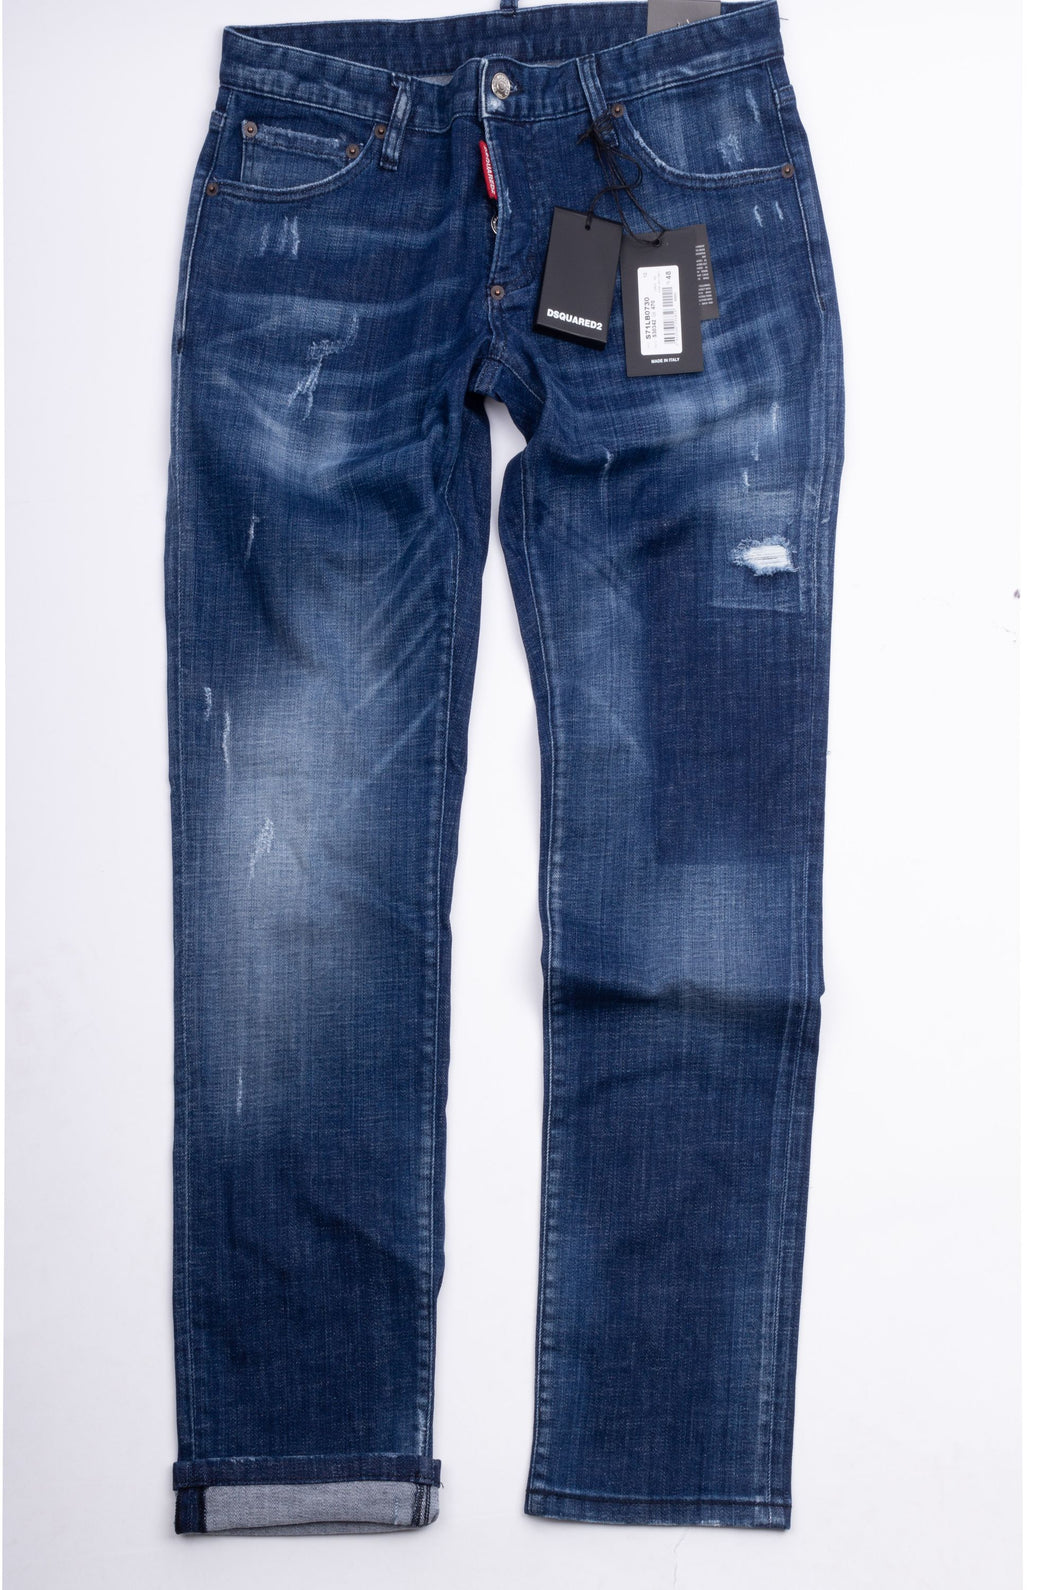 Dsquared2 Herren Jeans S71LB0730/430 | Hose Jeanshose für Herren Cool Guy